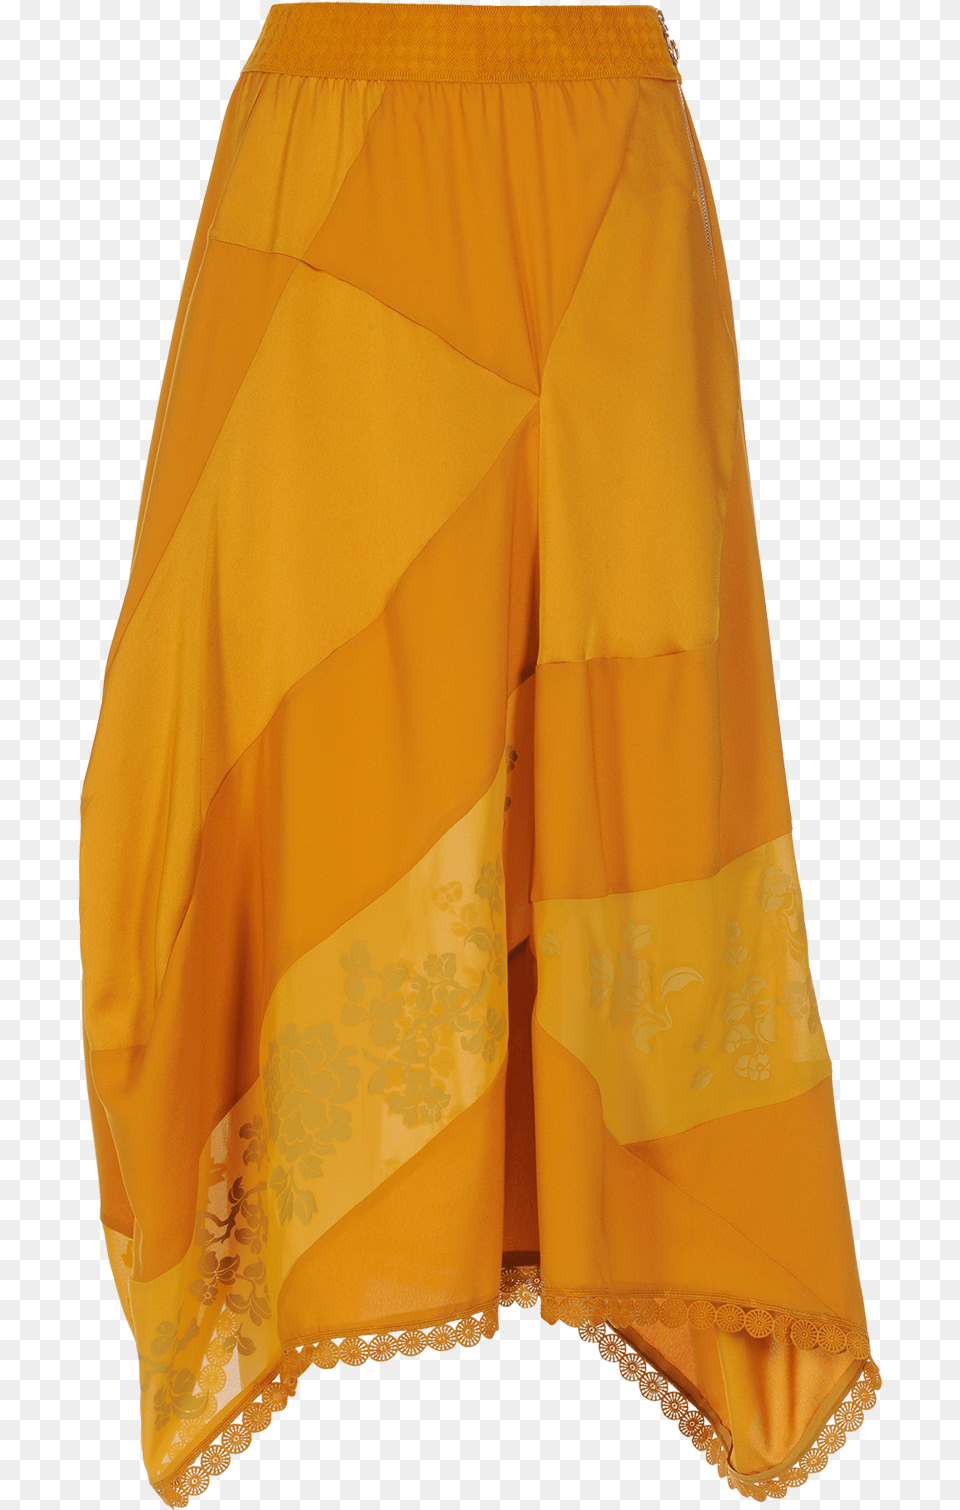 Golden Yellow Matt And Shine Satin Skirt, Clothing Free Png Download